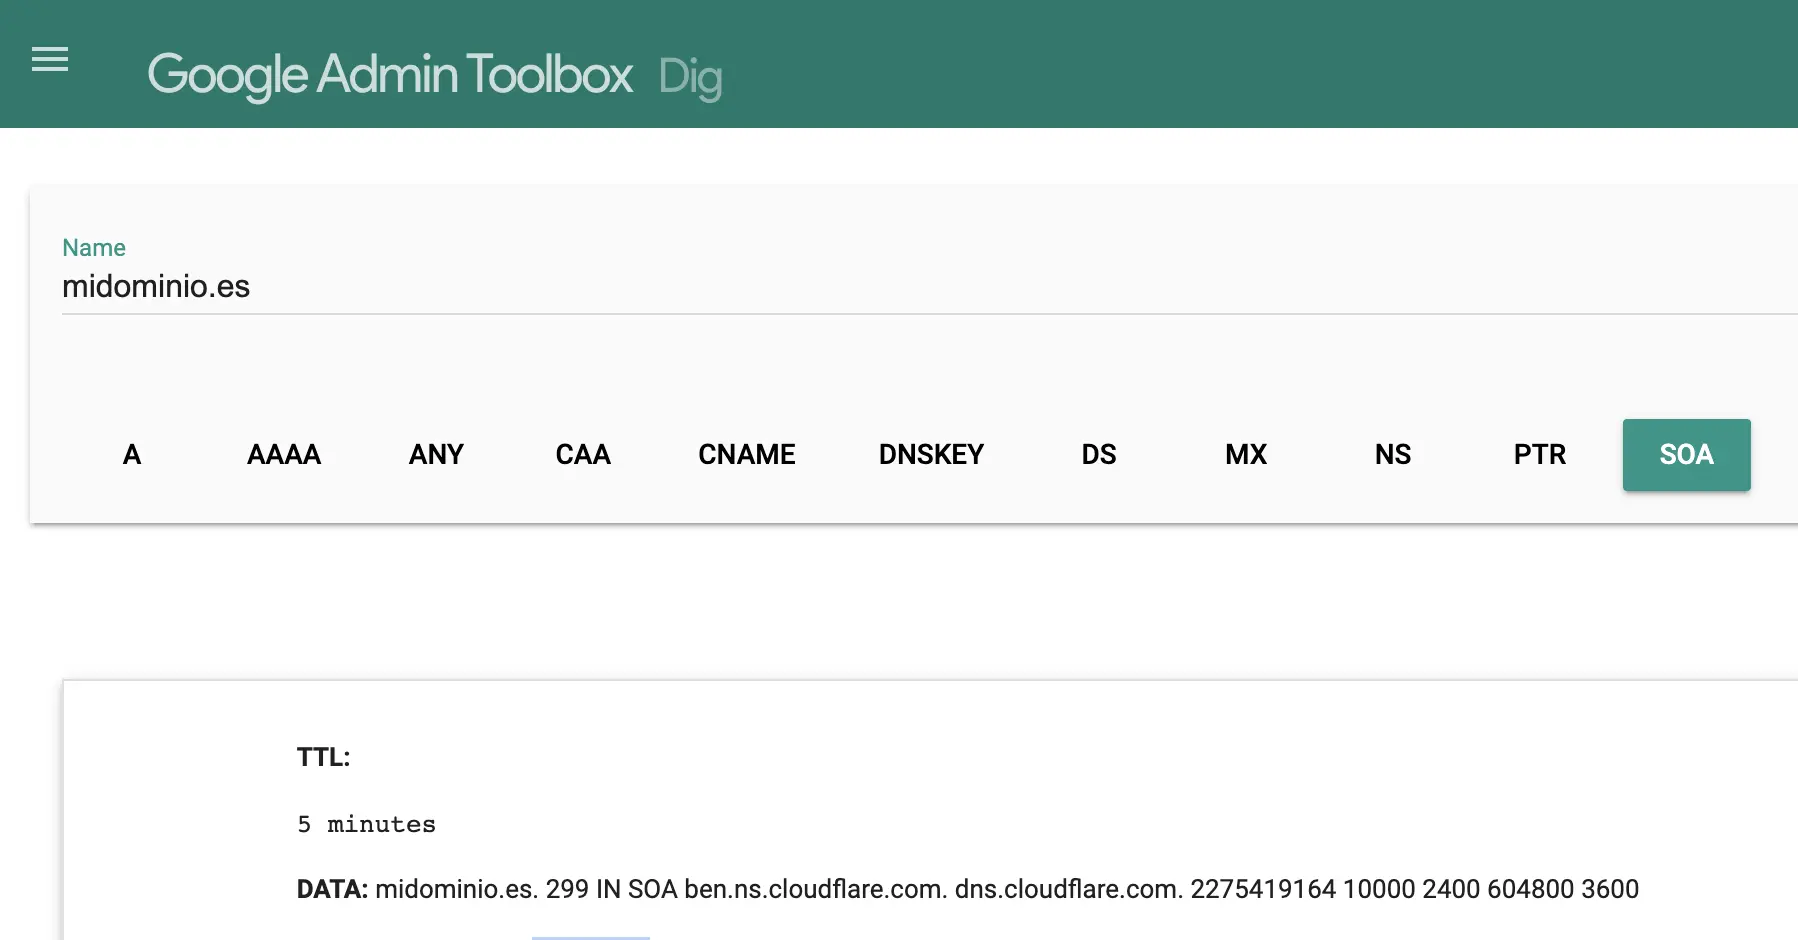 Google Admin Toolbox Dig Online Service